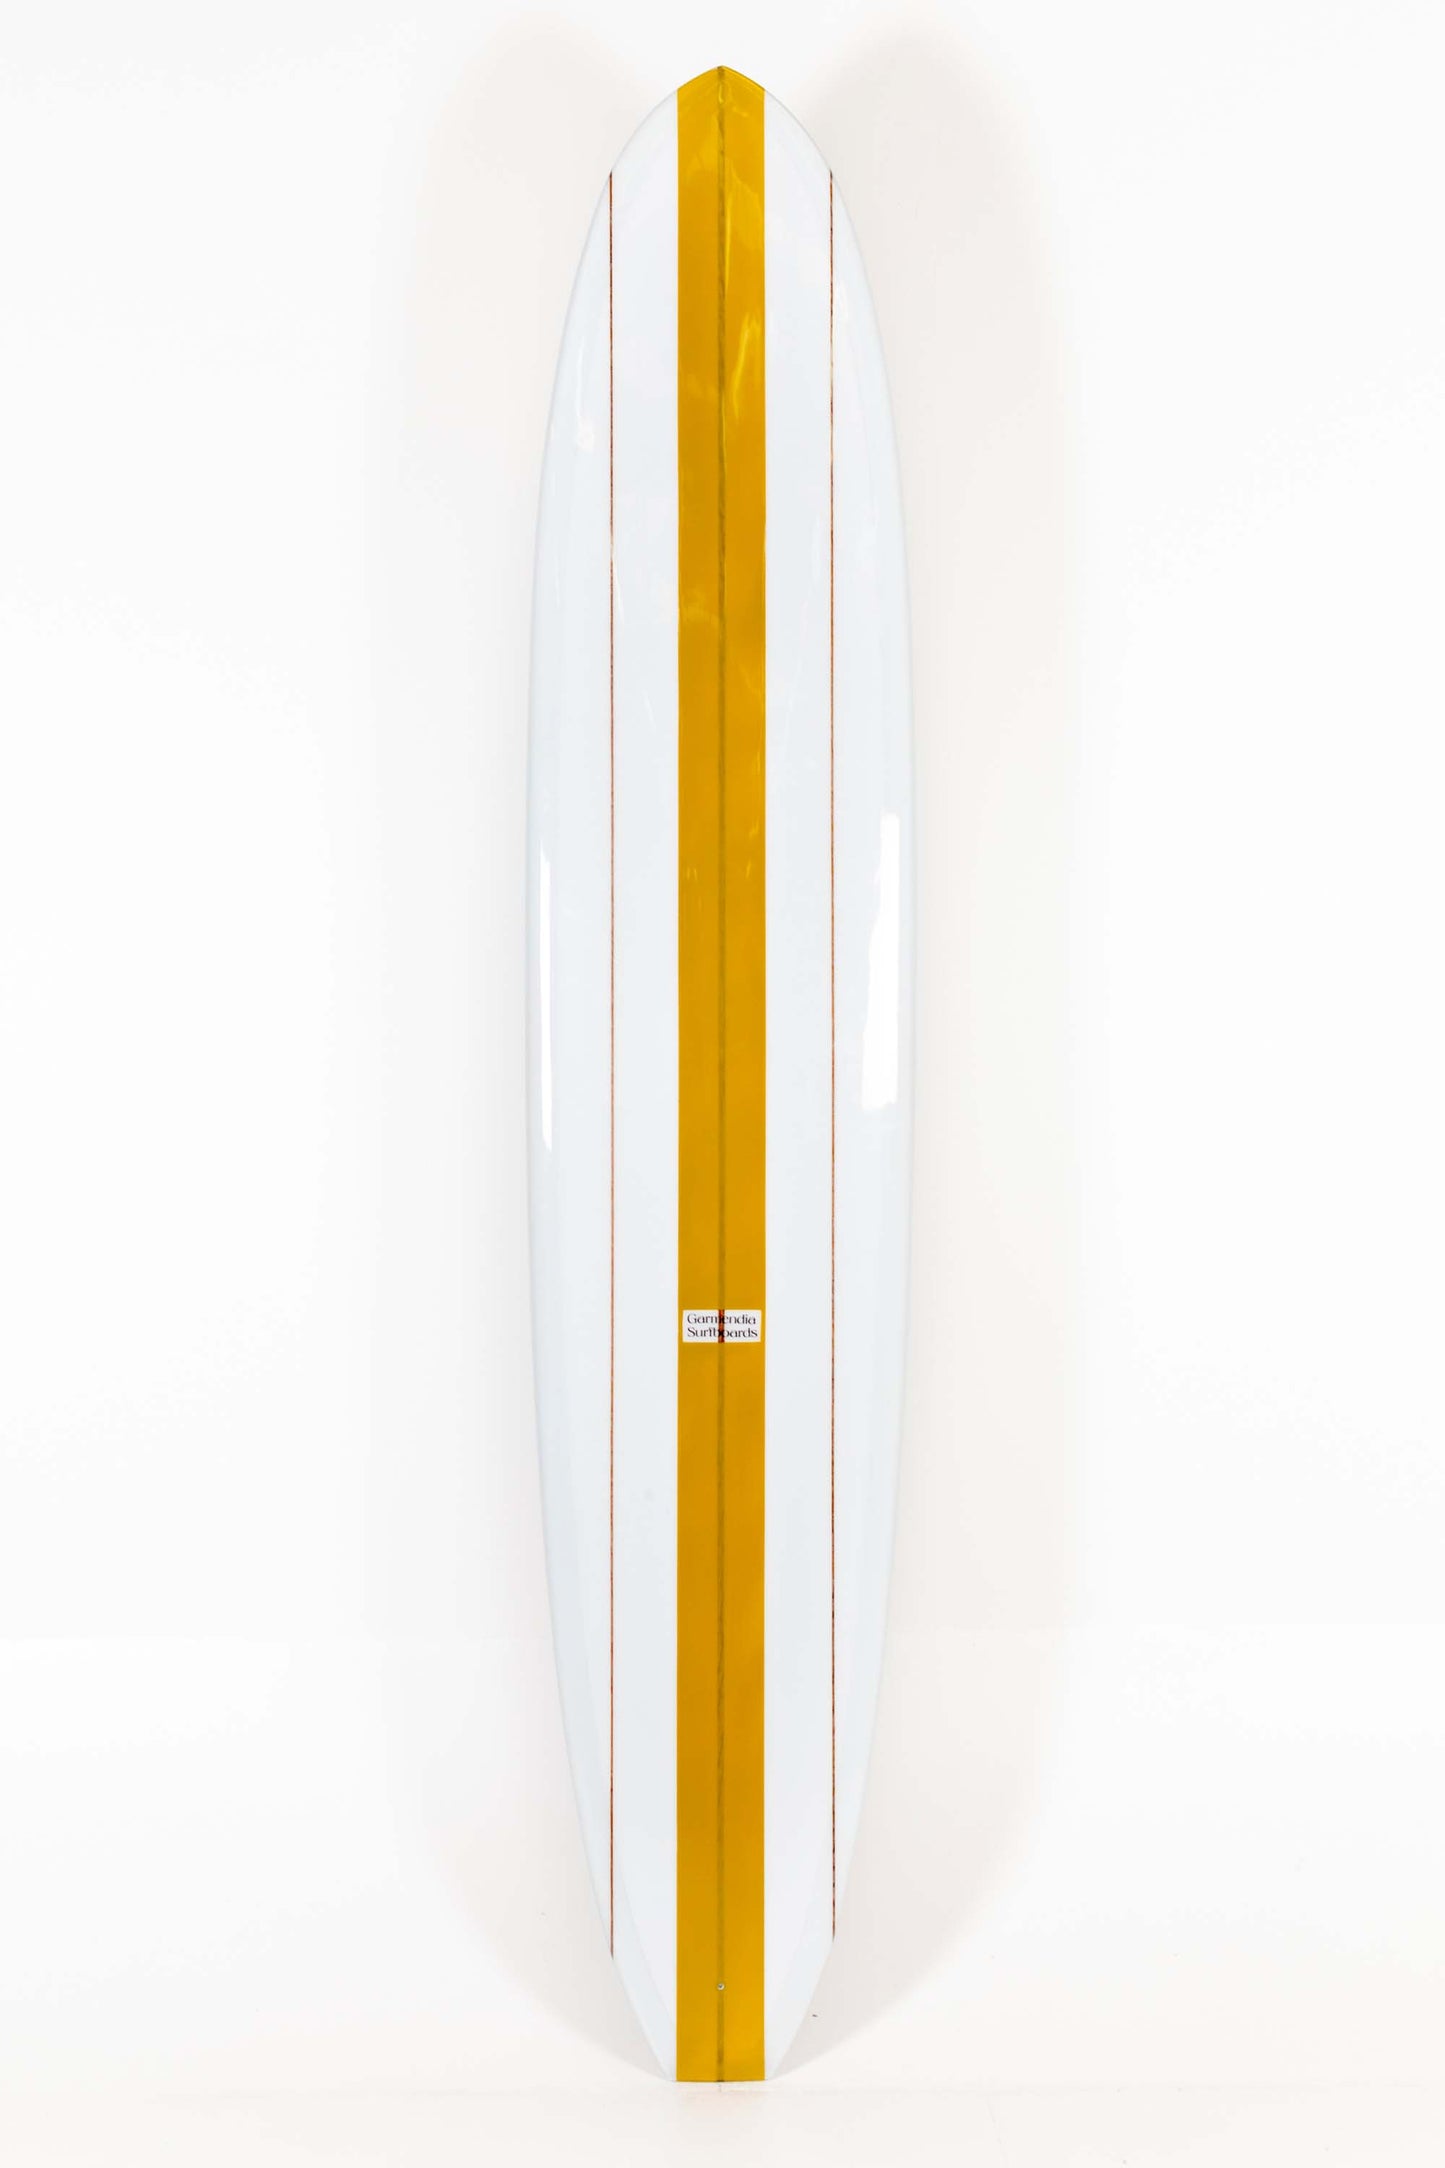 Pukas Surf Shop - Garmendia Surfboards - FREE BIRD - 9’7"